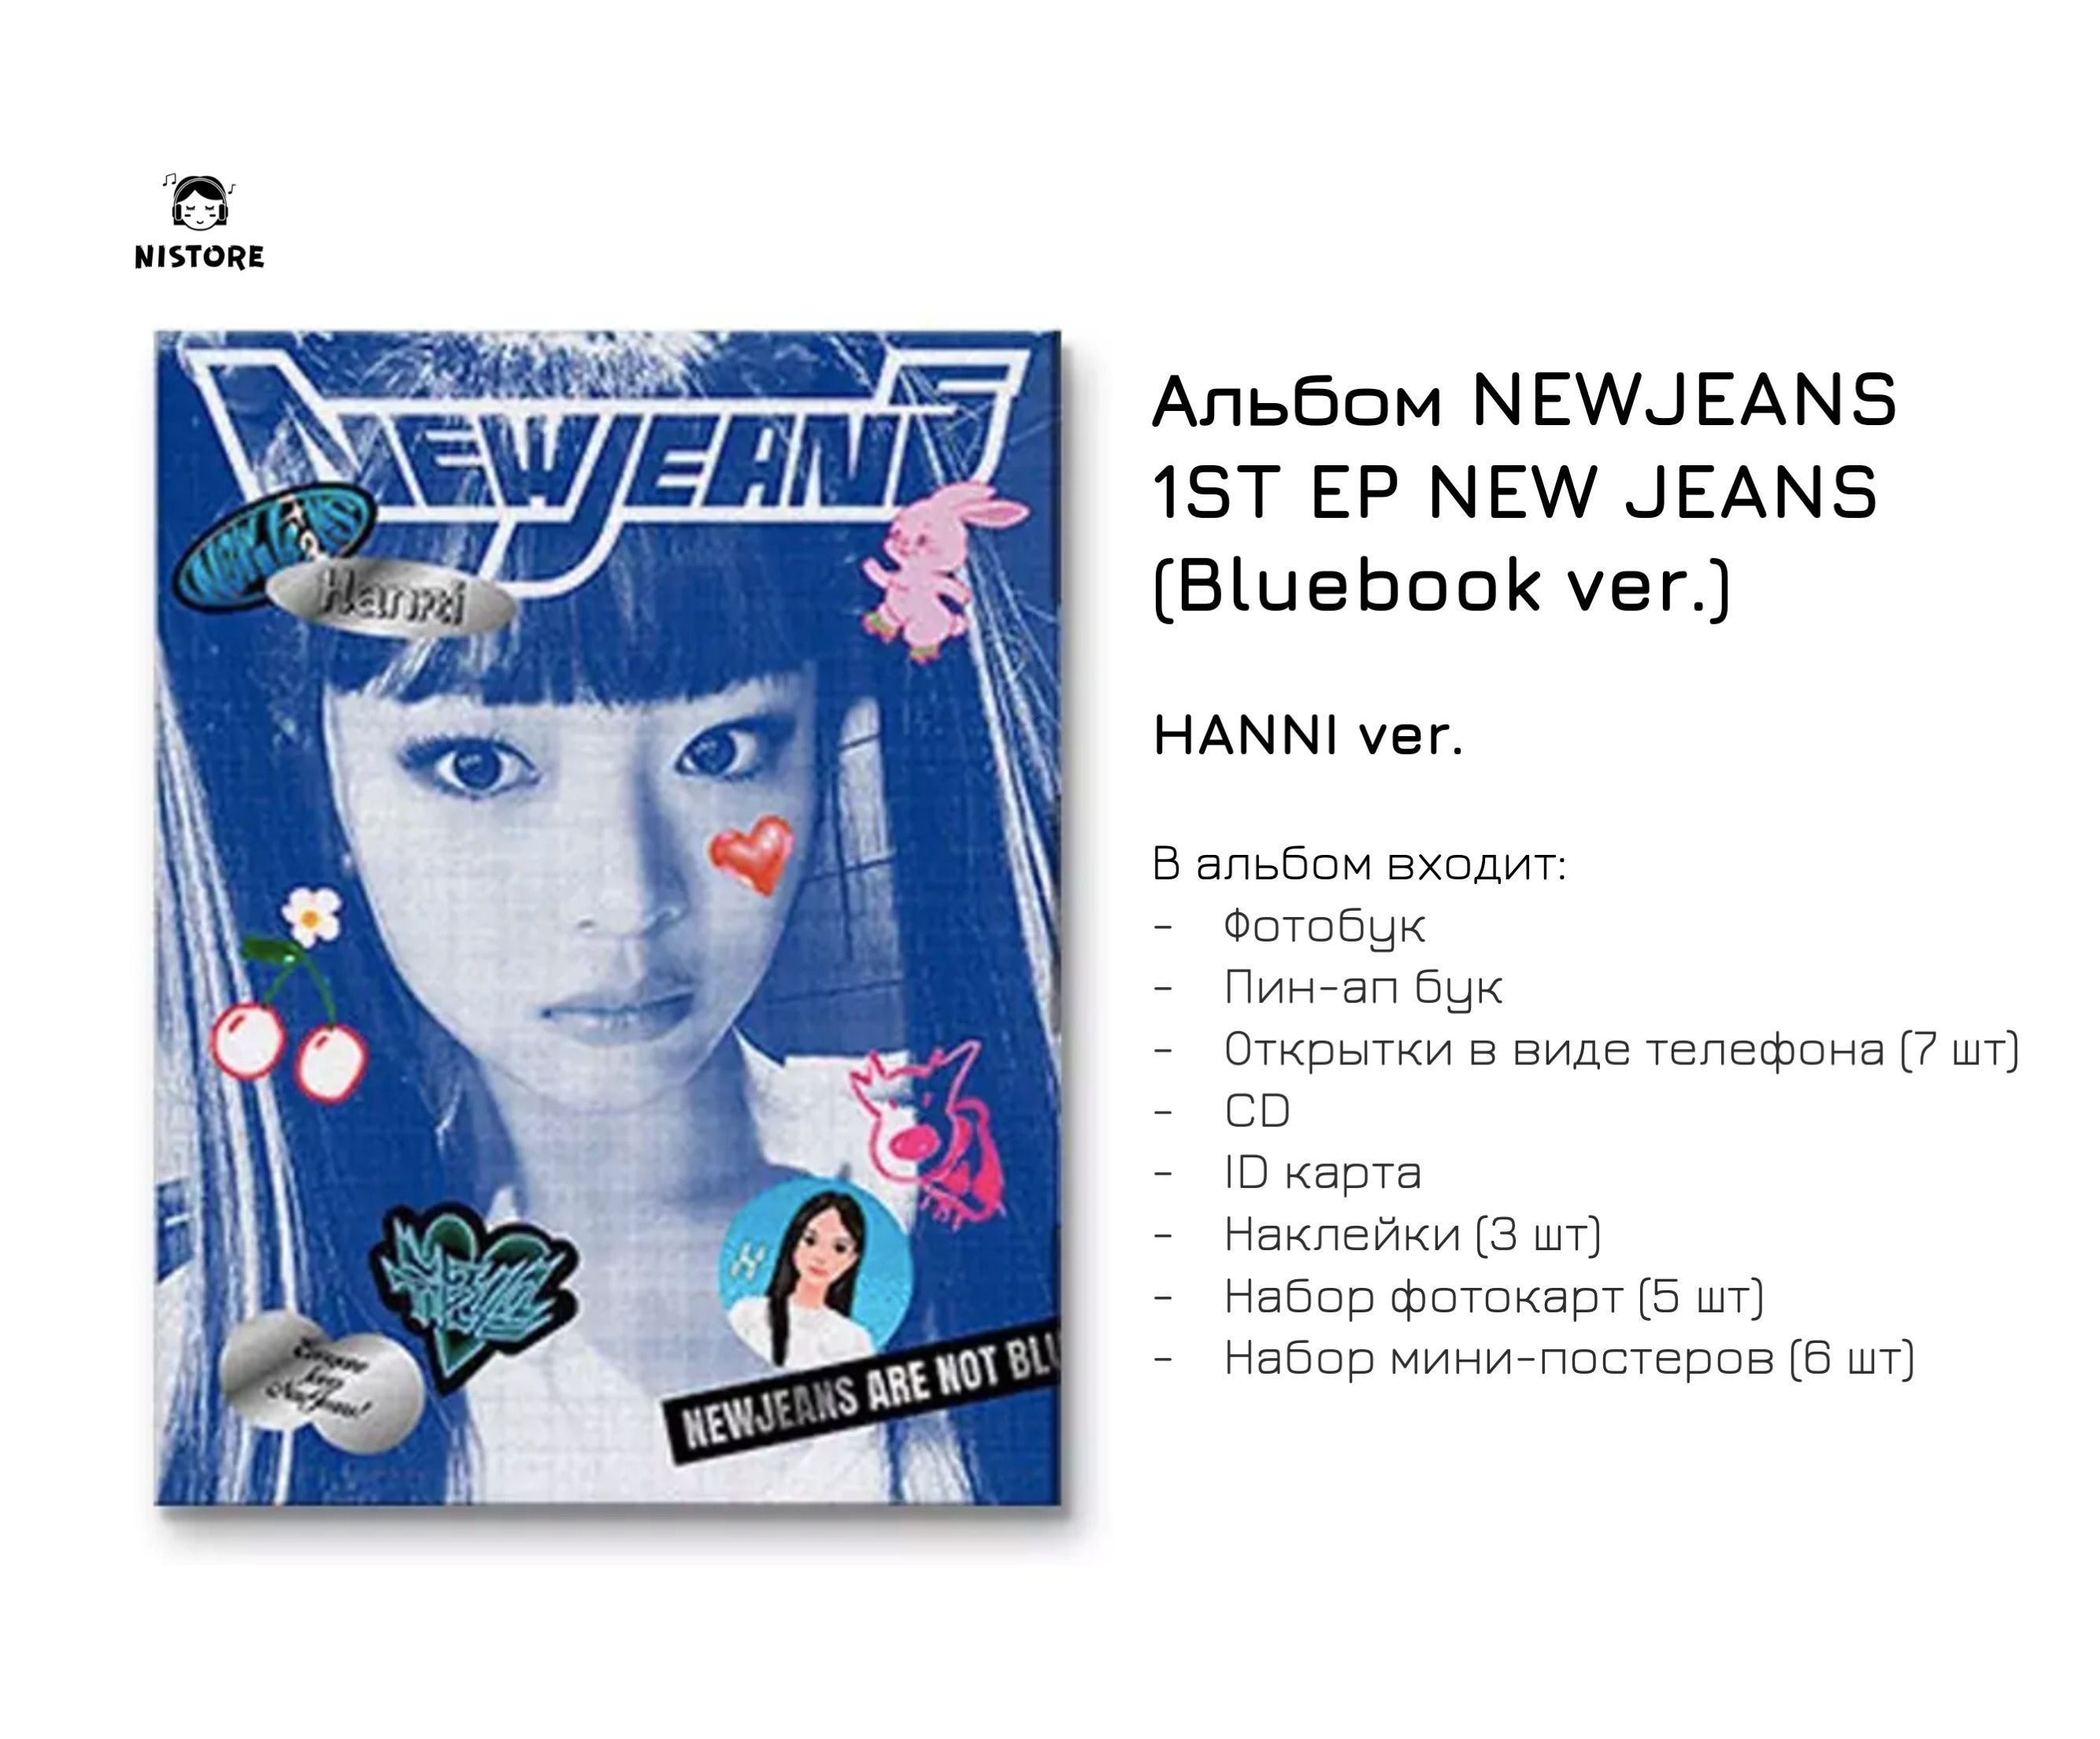 CD Альбом NEWJEANS - 1ST EP NEW JEANS (BLUEBOOK VER.) (Версия HANNI) -  купить по низким ценам в интернет-магазине OZON (982489142)